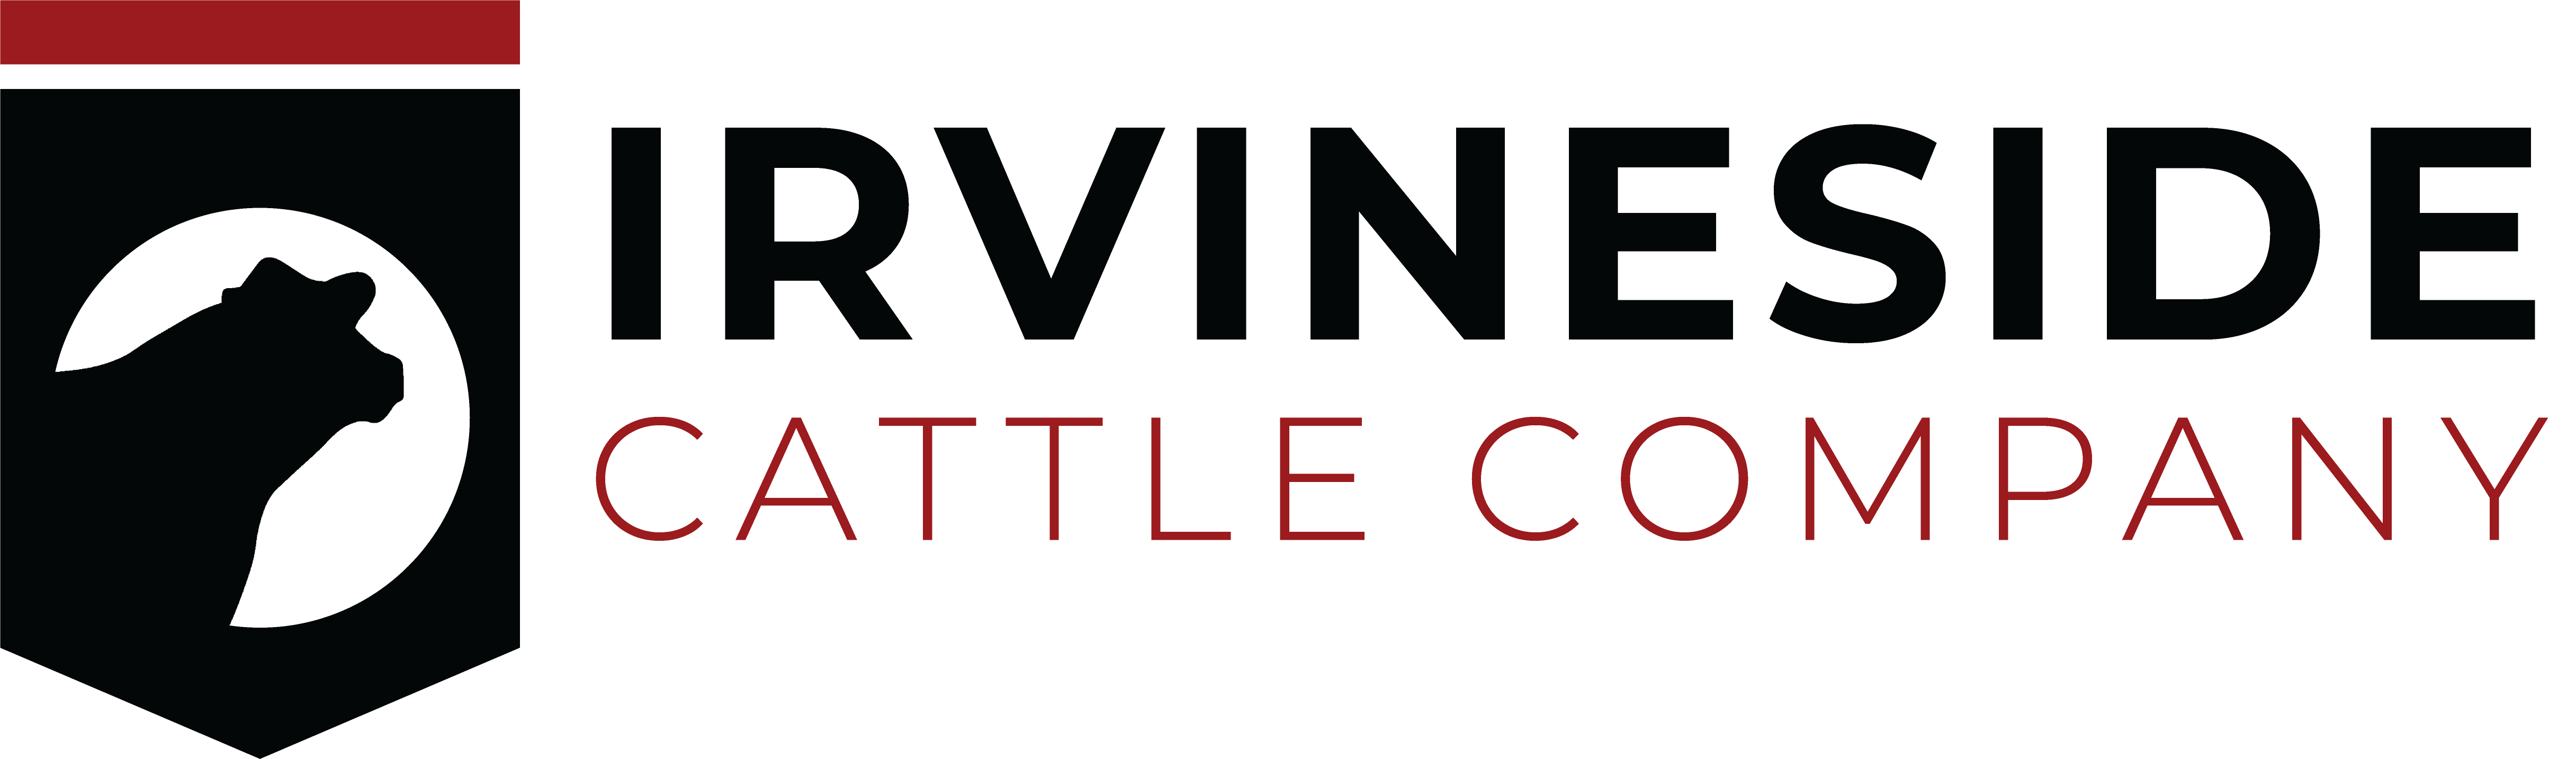 Irvineside Cattle Company logo